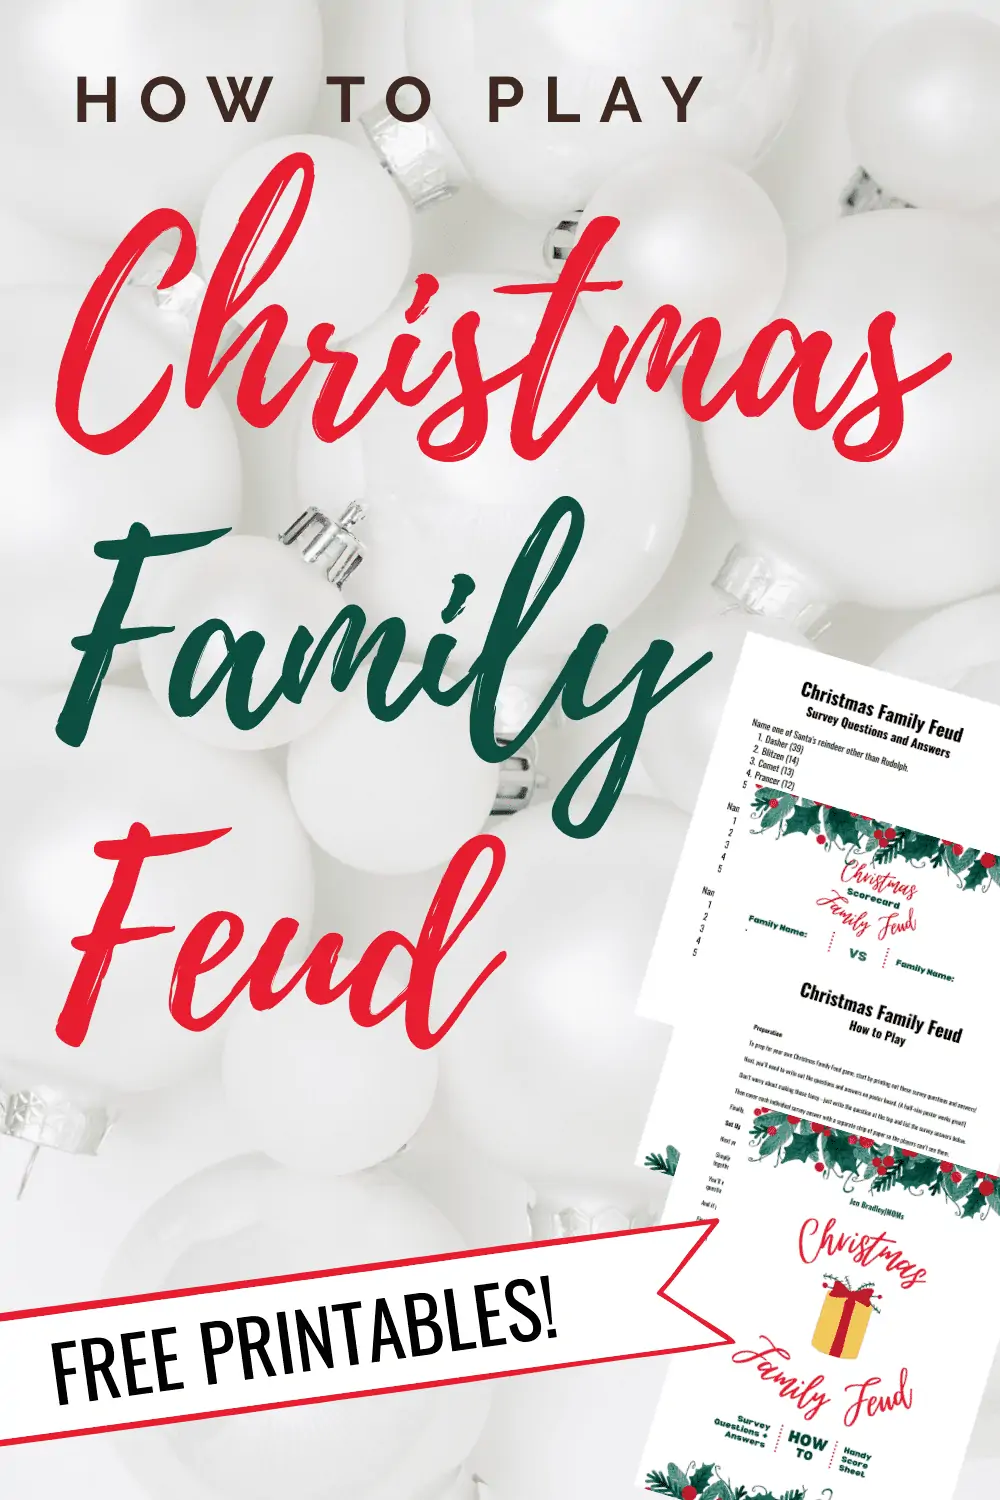 Fun Christmas Family Feud - How to Play and Free Printable!